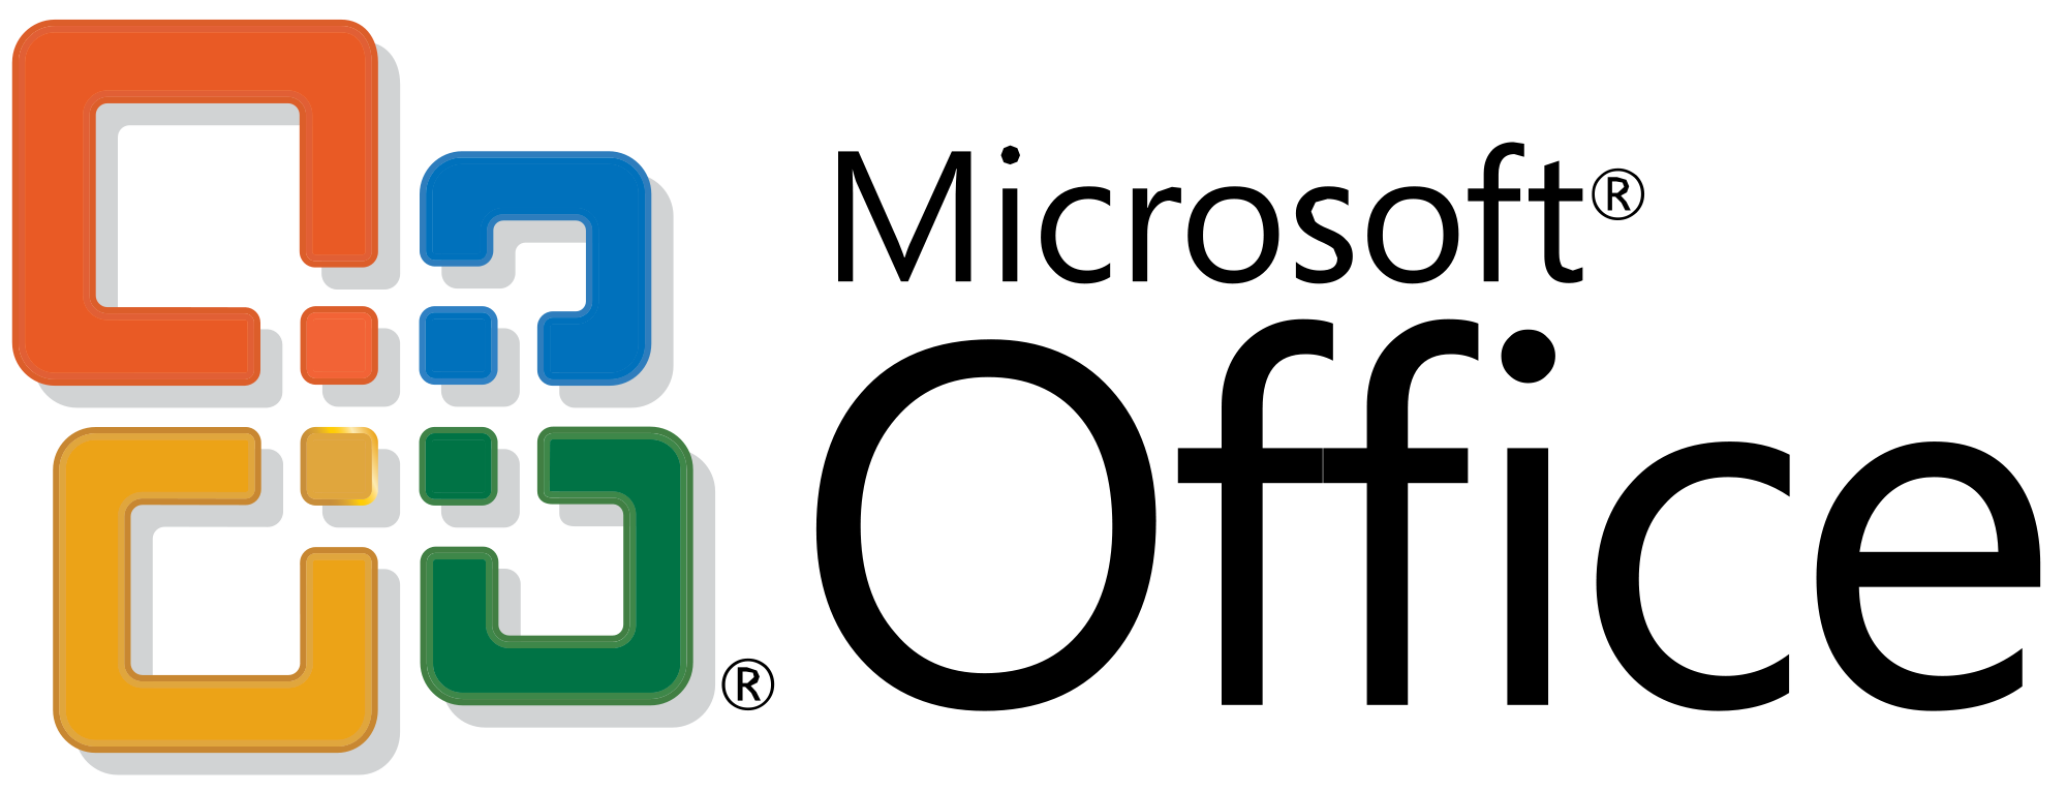 Microsoft Office Logo Png Image Free | Graficsea